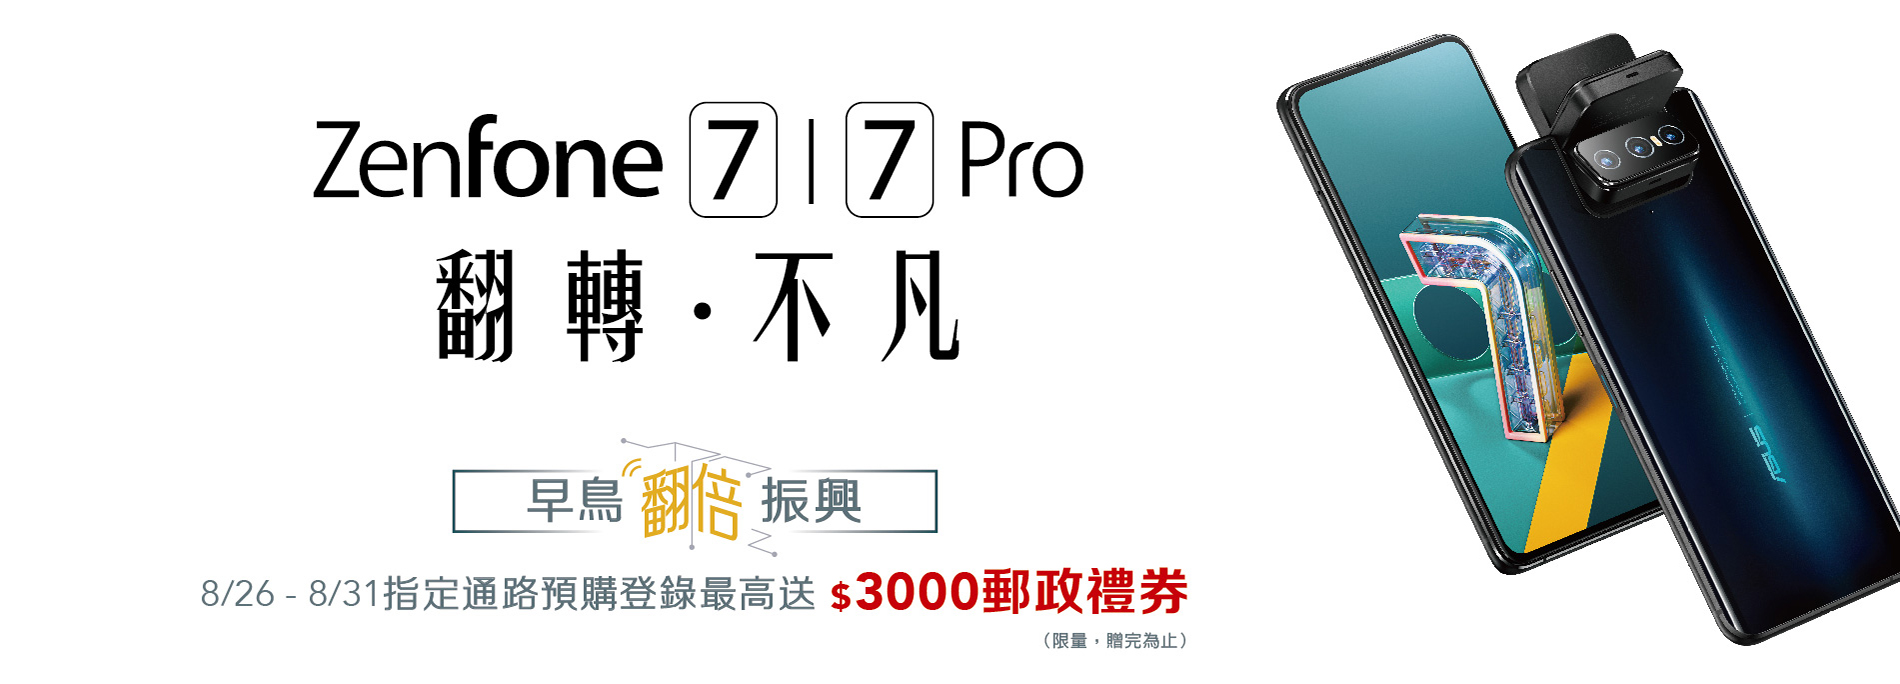 Zenfone 7 7 Pro 早鳥 翻倍 振興 最高再省 3 000